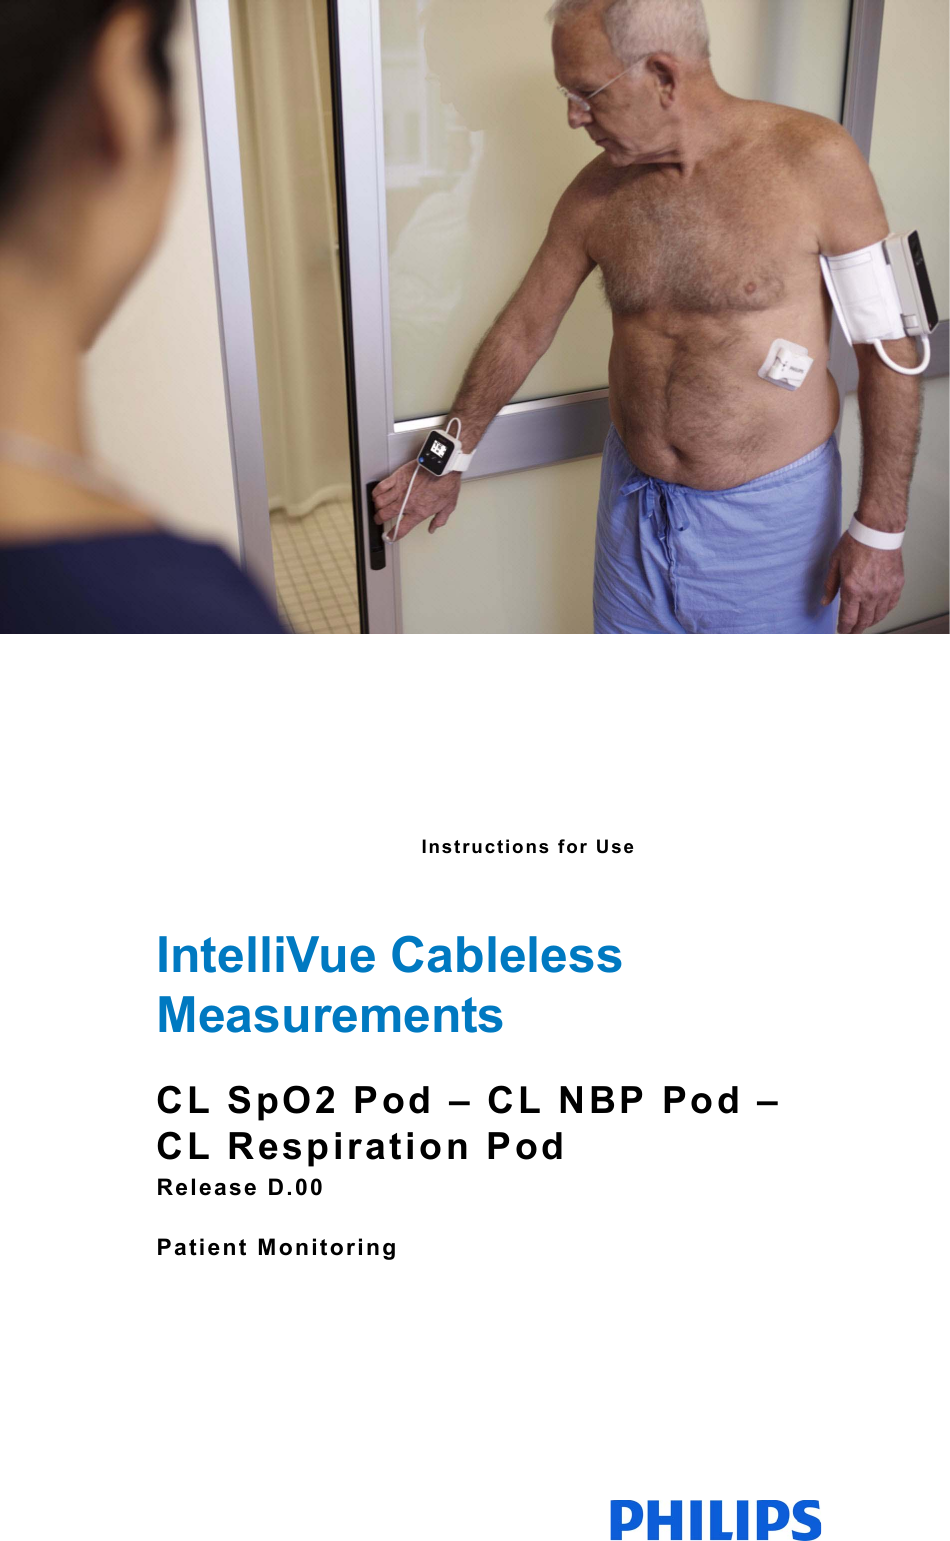 Instructions for Use IntelliVue Cableless MeasurementsCL SpO2 Pod – CL NBP Pod – CL Respiration PodRelease D.00Patient Monitoring